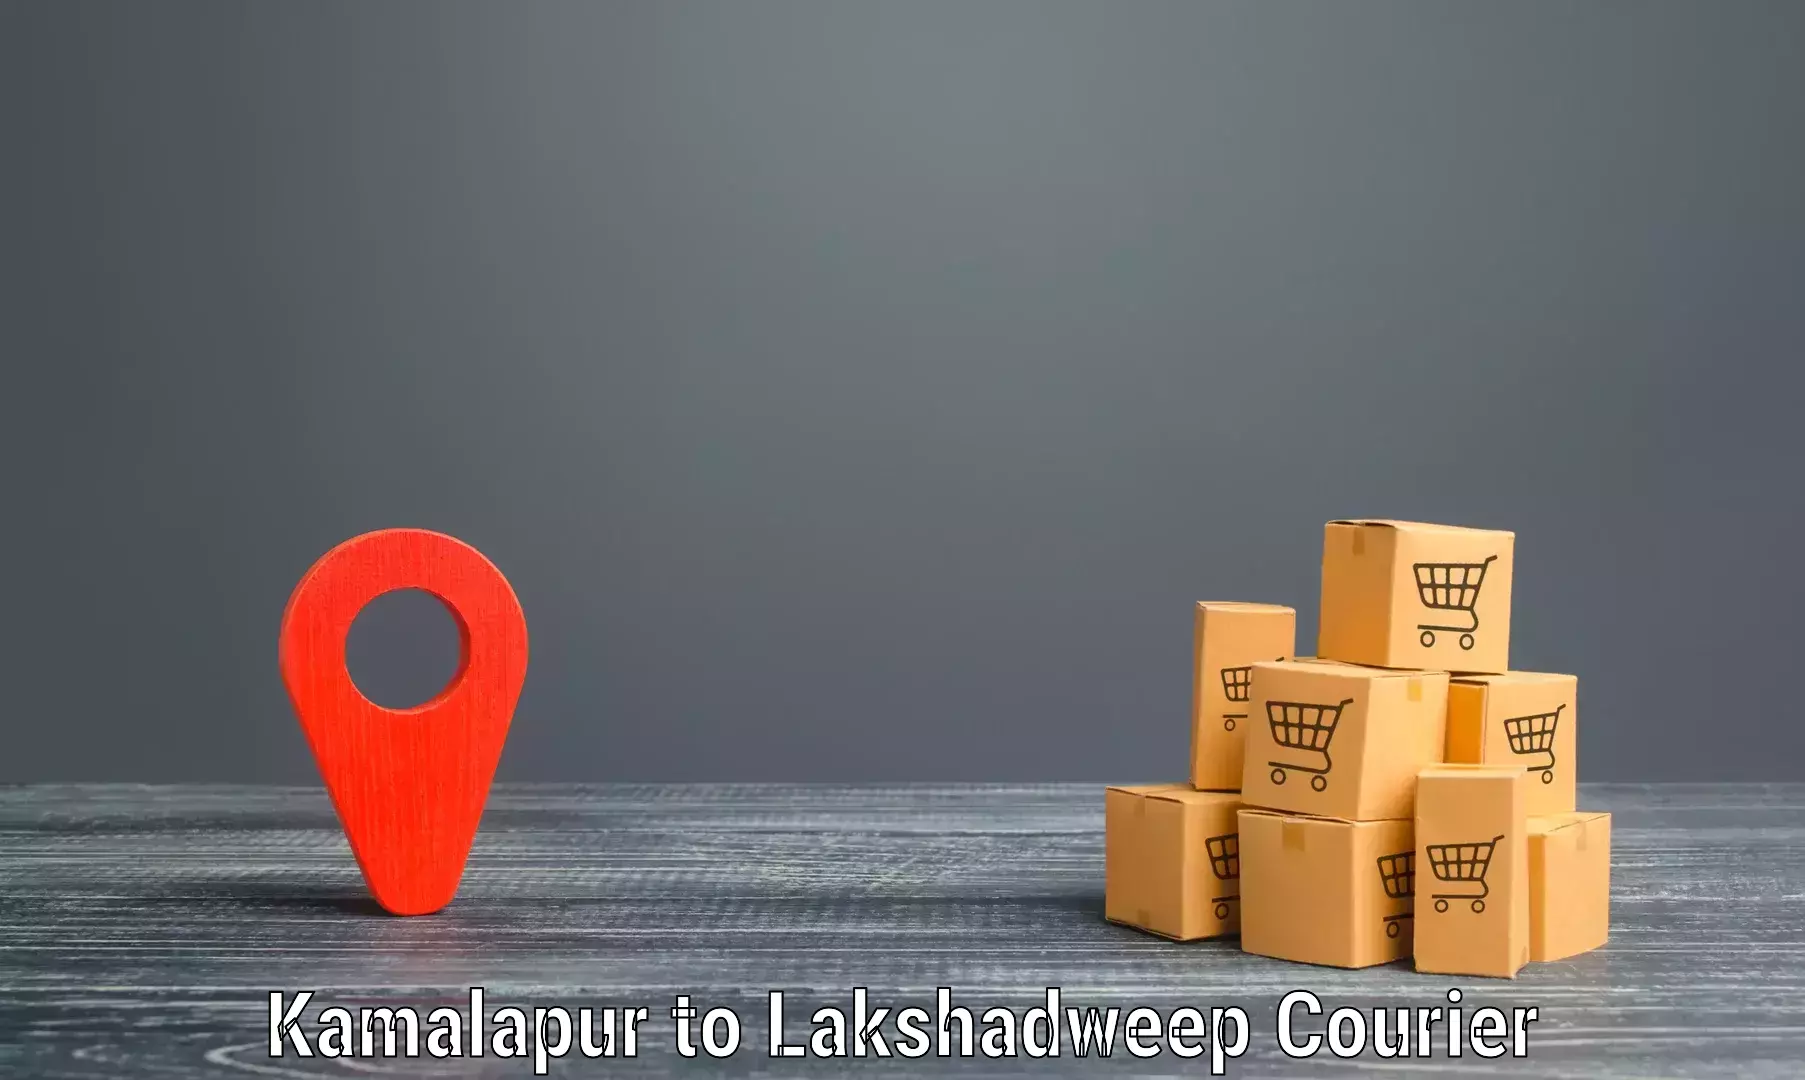 Express logistics providers Kamalapur to Lakshadweep